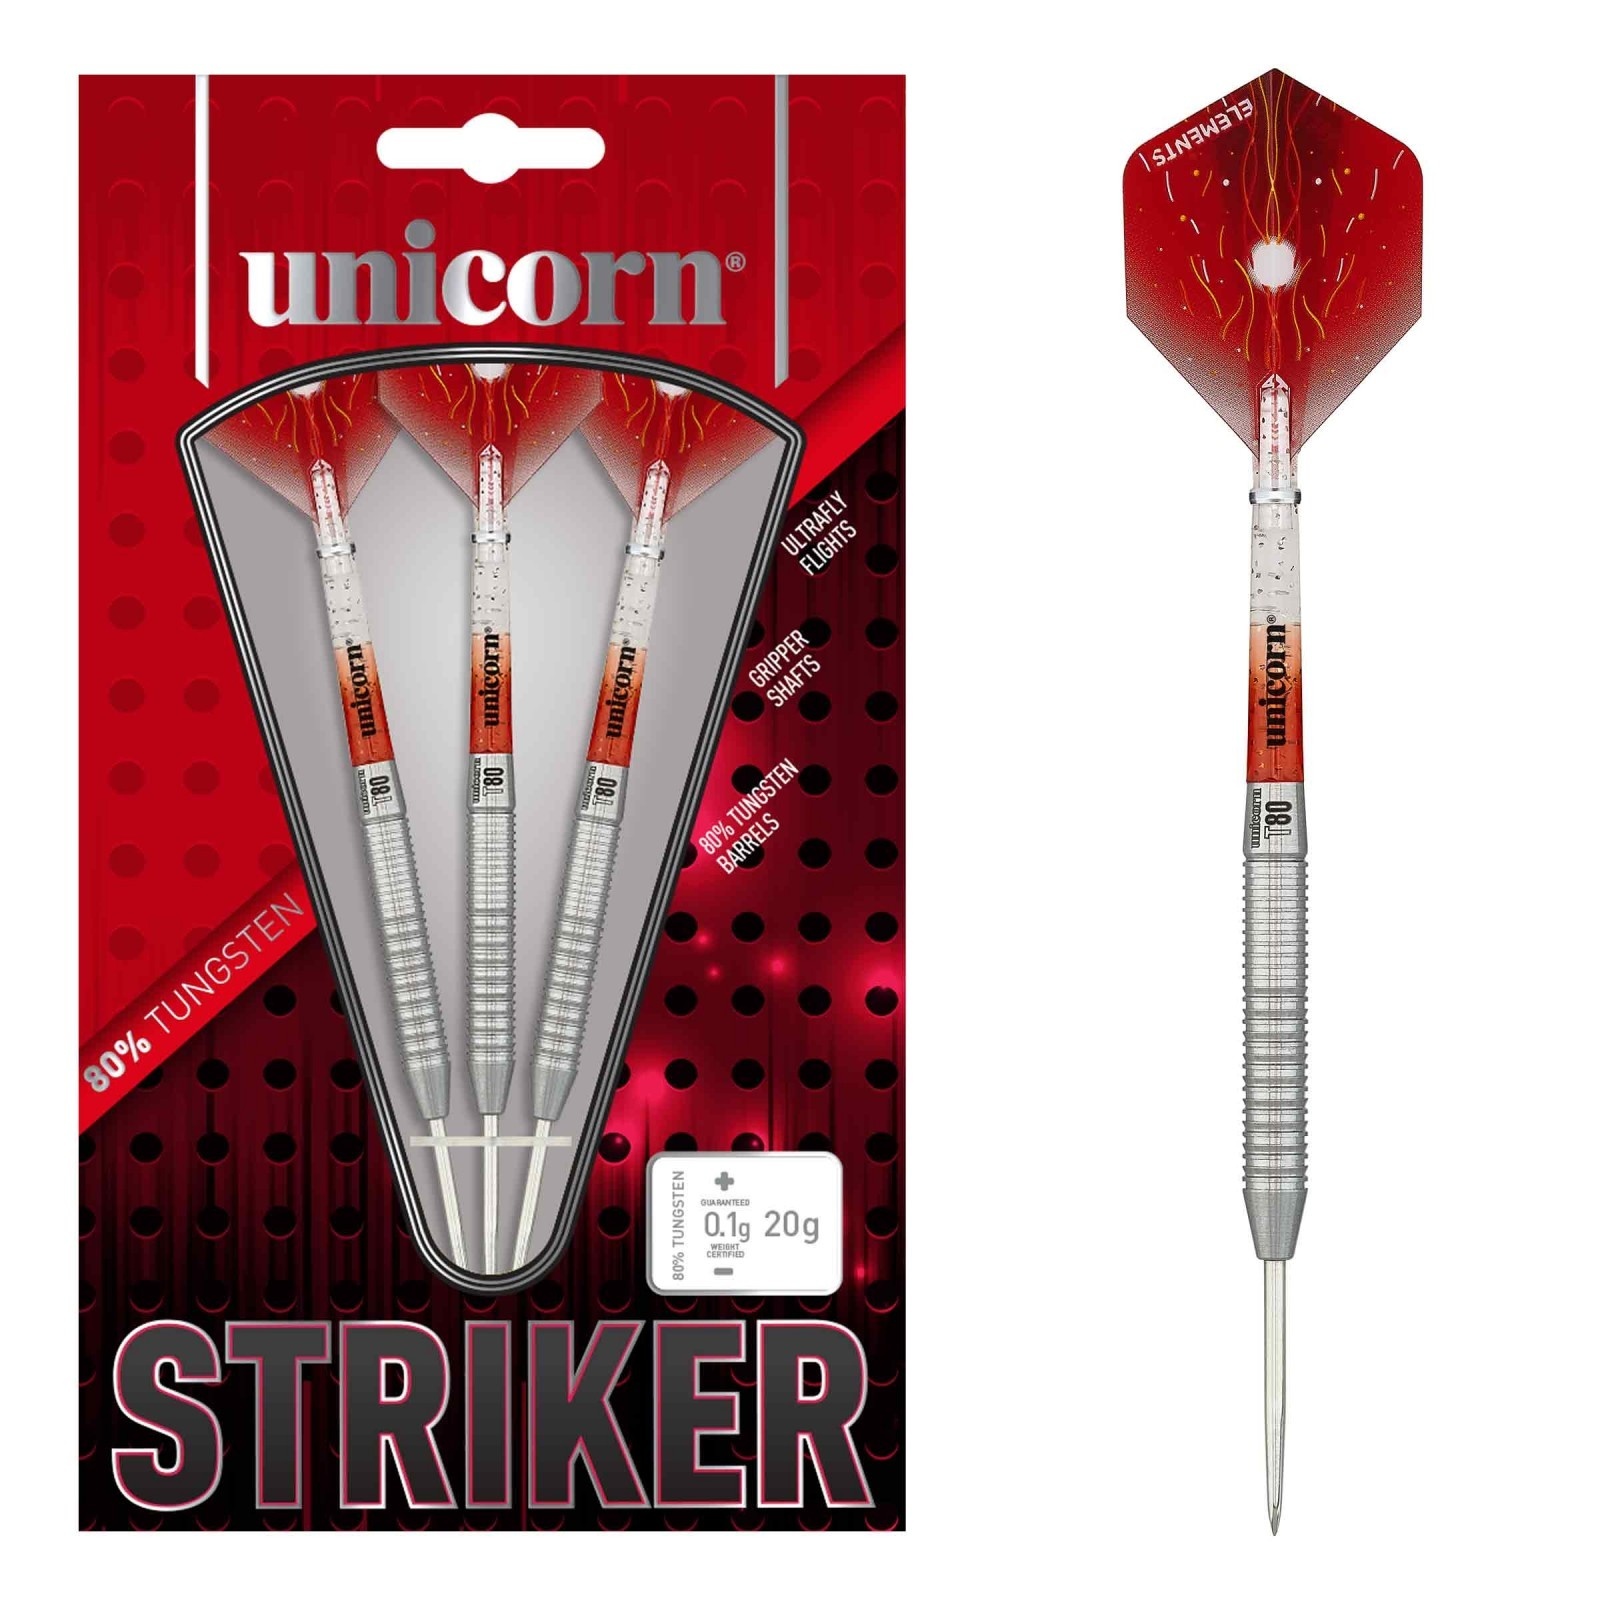 Unicorn Core Steeldarts 1 80% Striker - XL